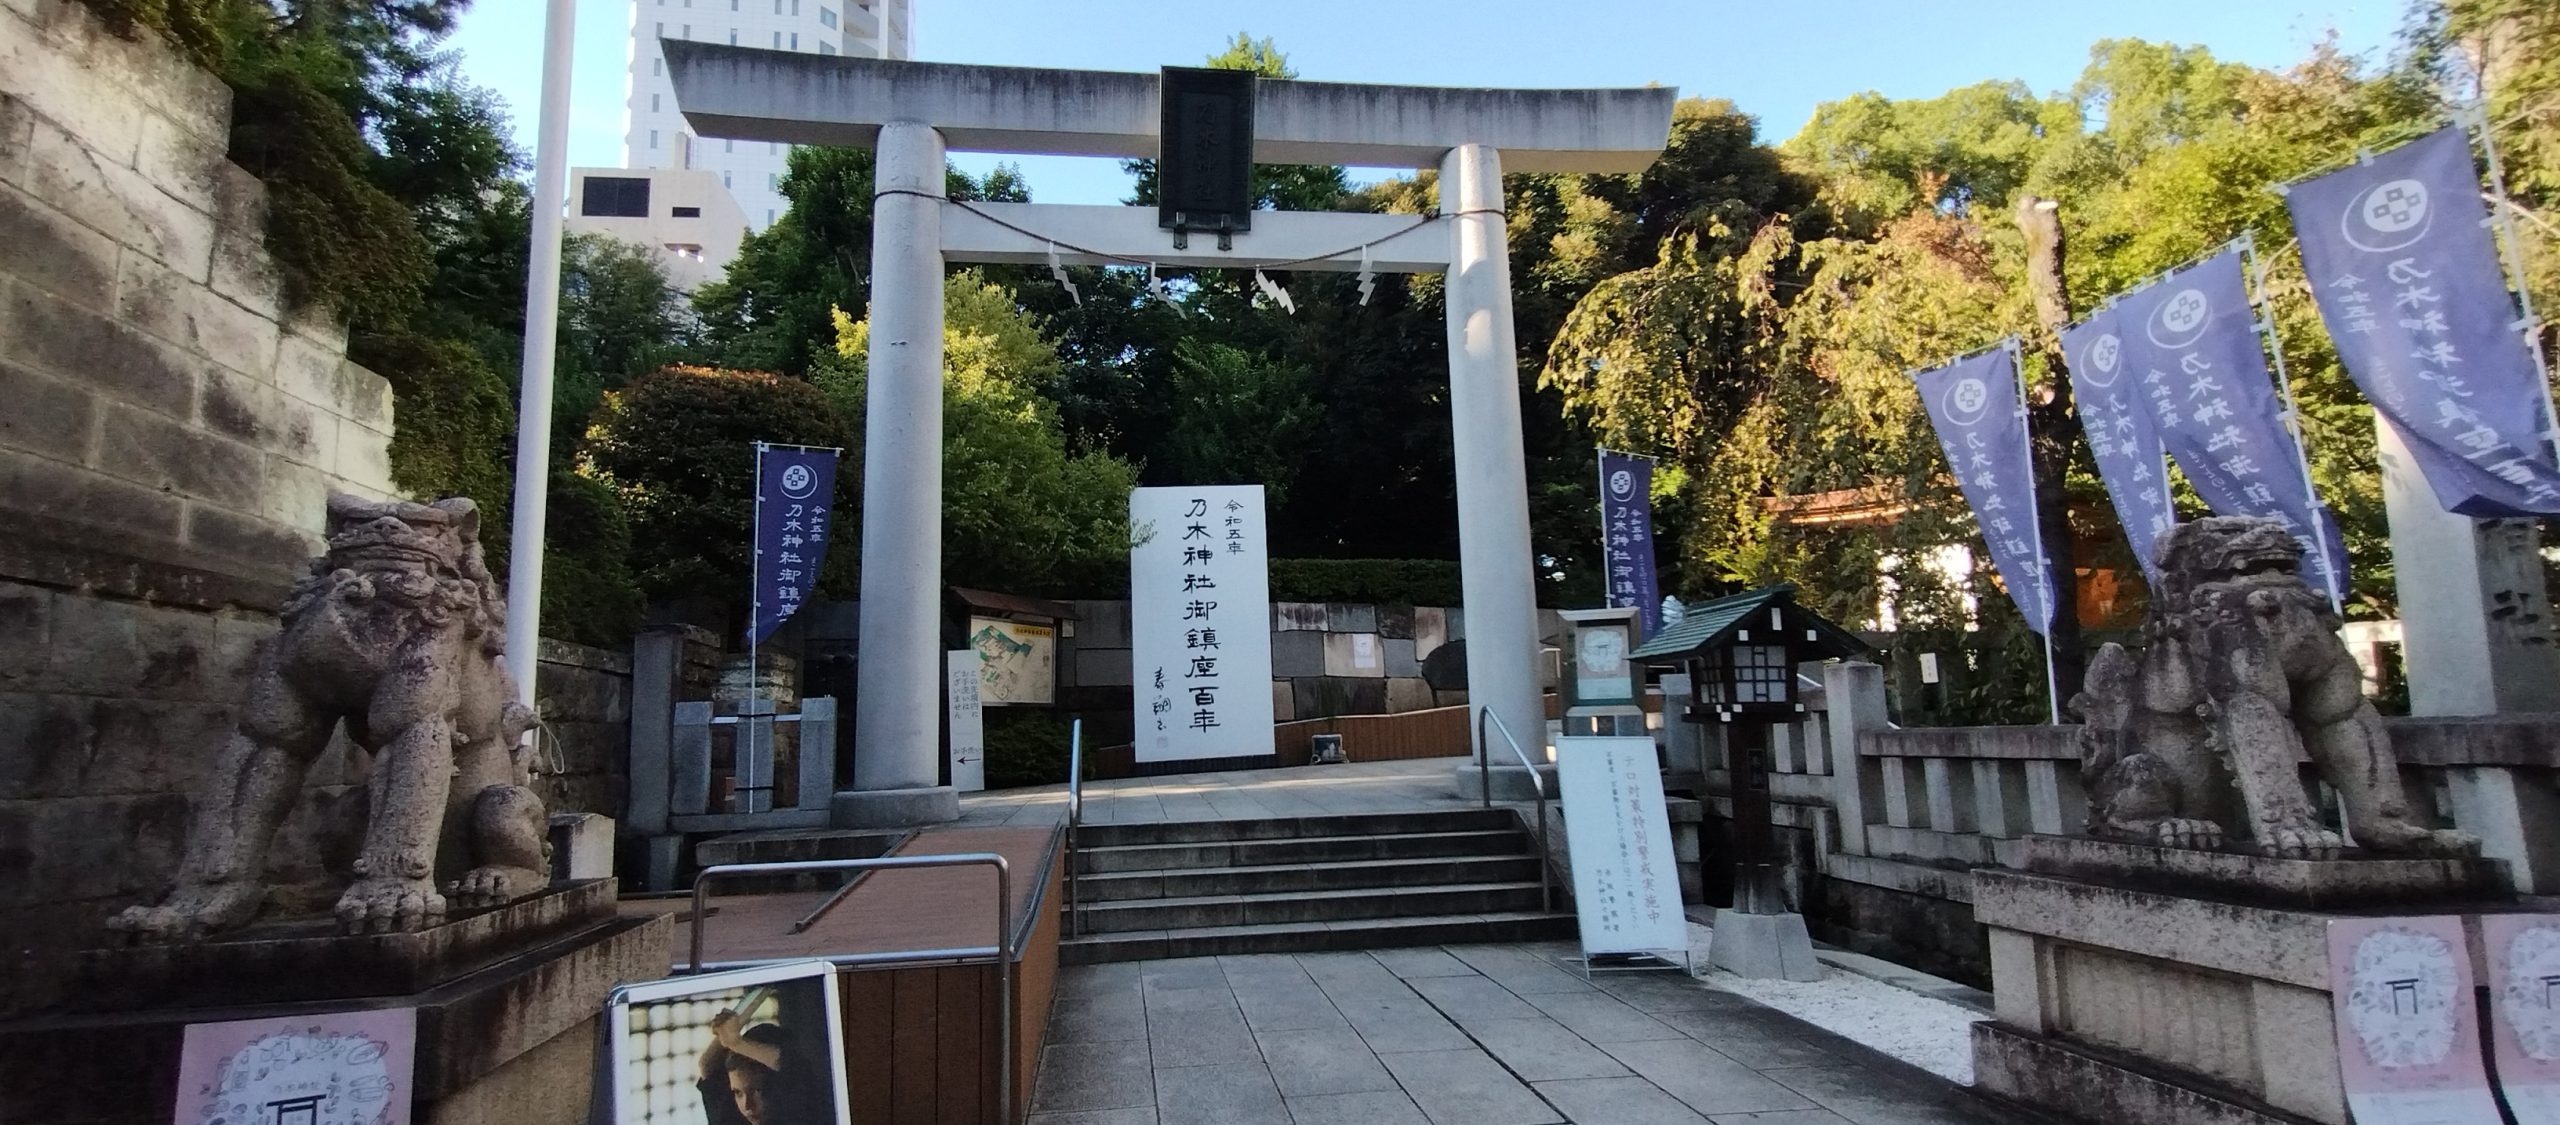 乃木神社入口の鳥居